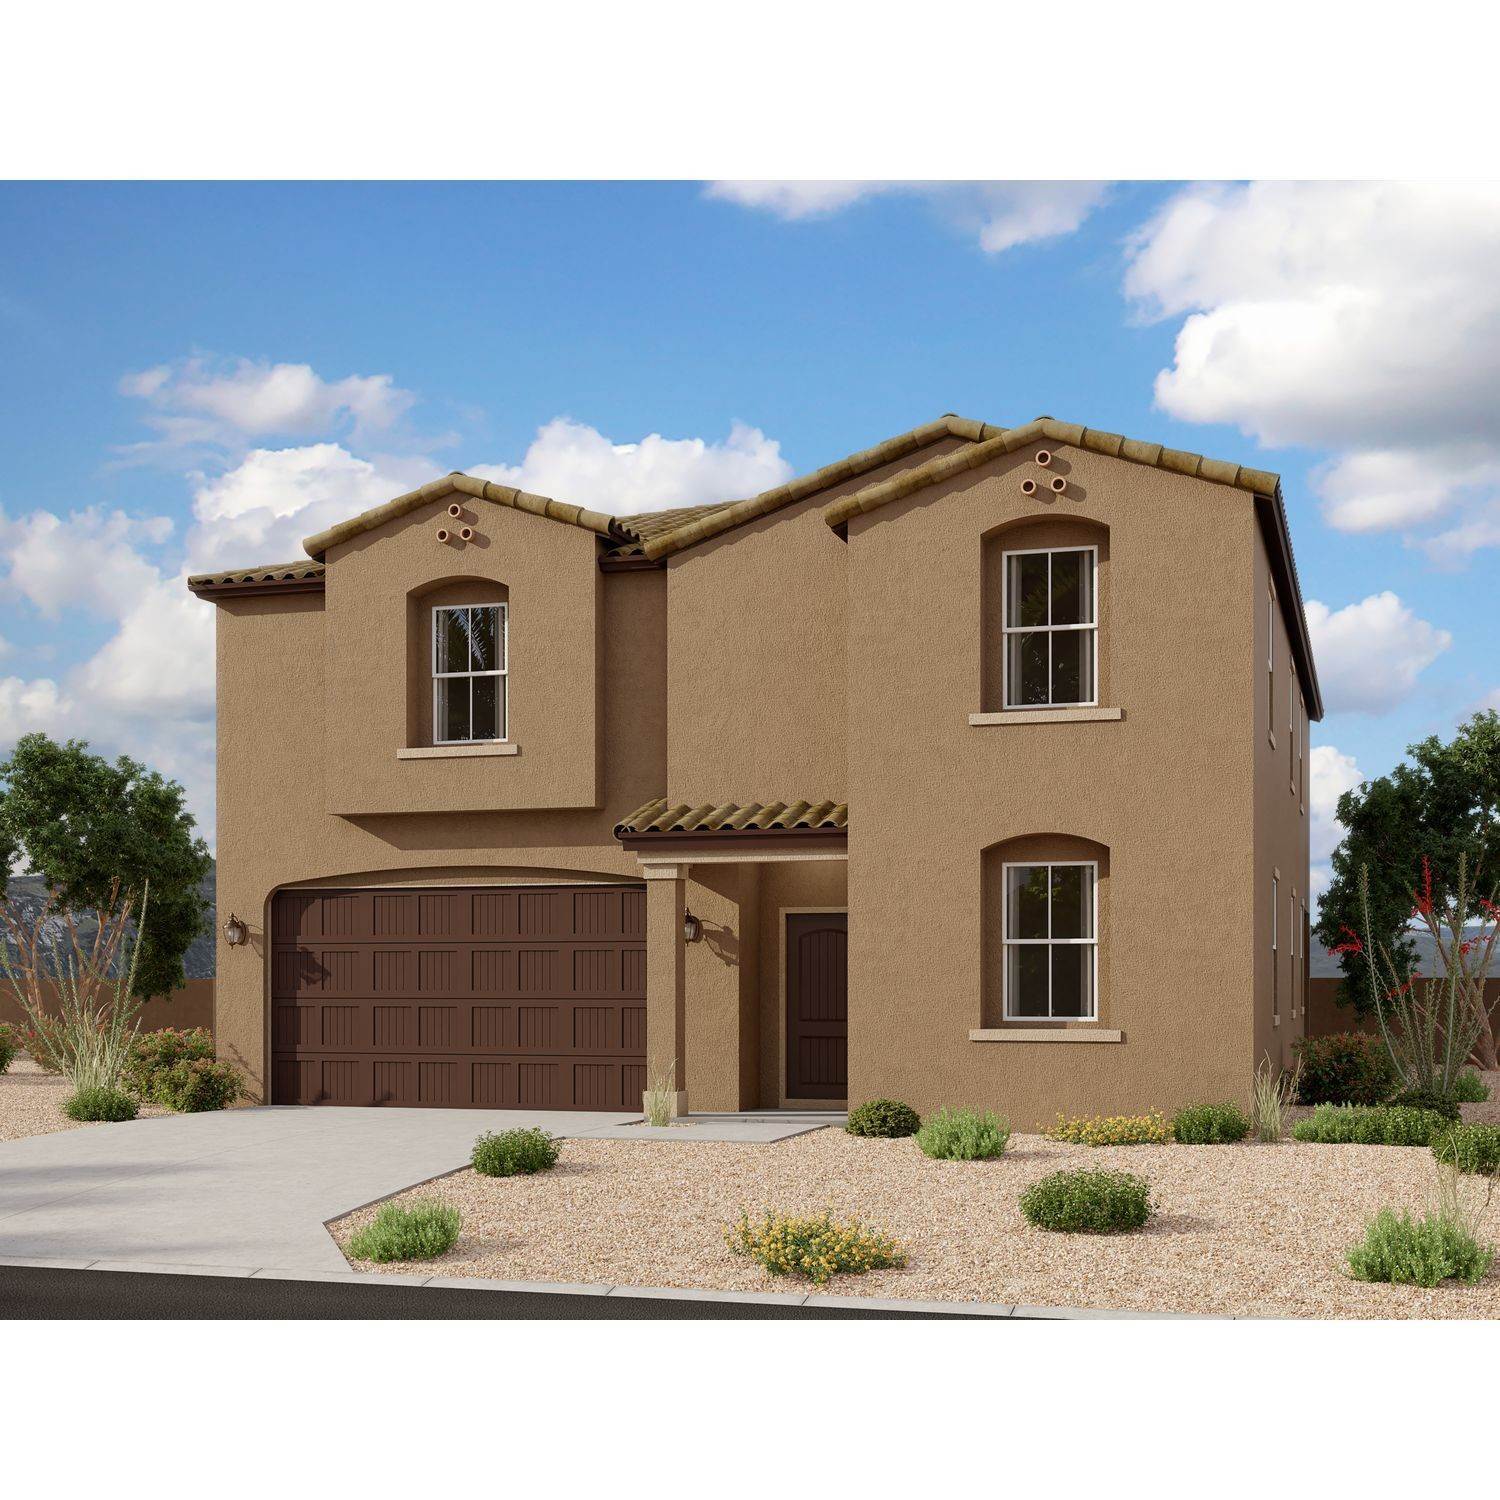 2. Single Family for Sale at Eastmark 9619 E Solina Ave, Mesa, AZ 85212